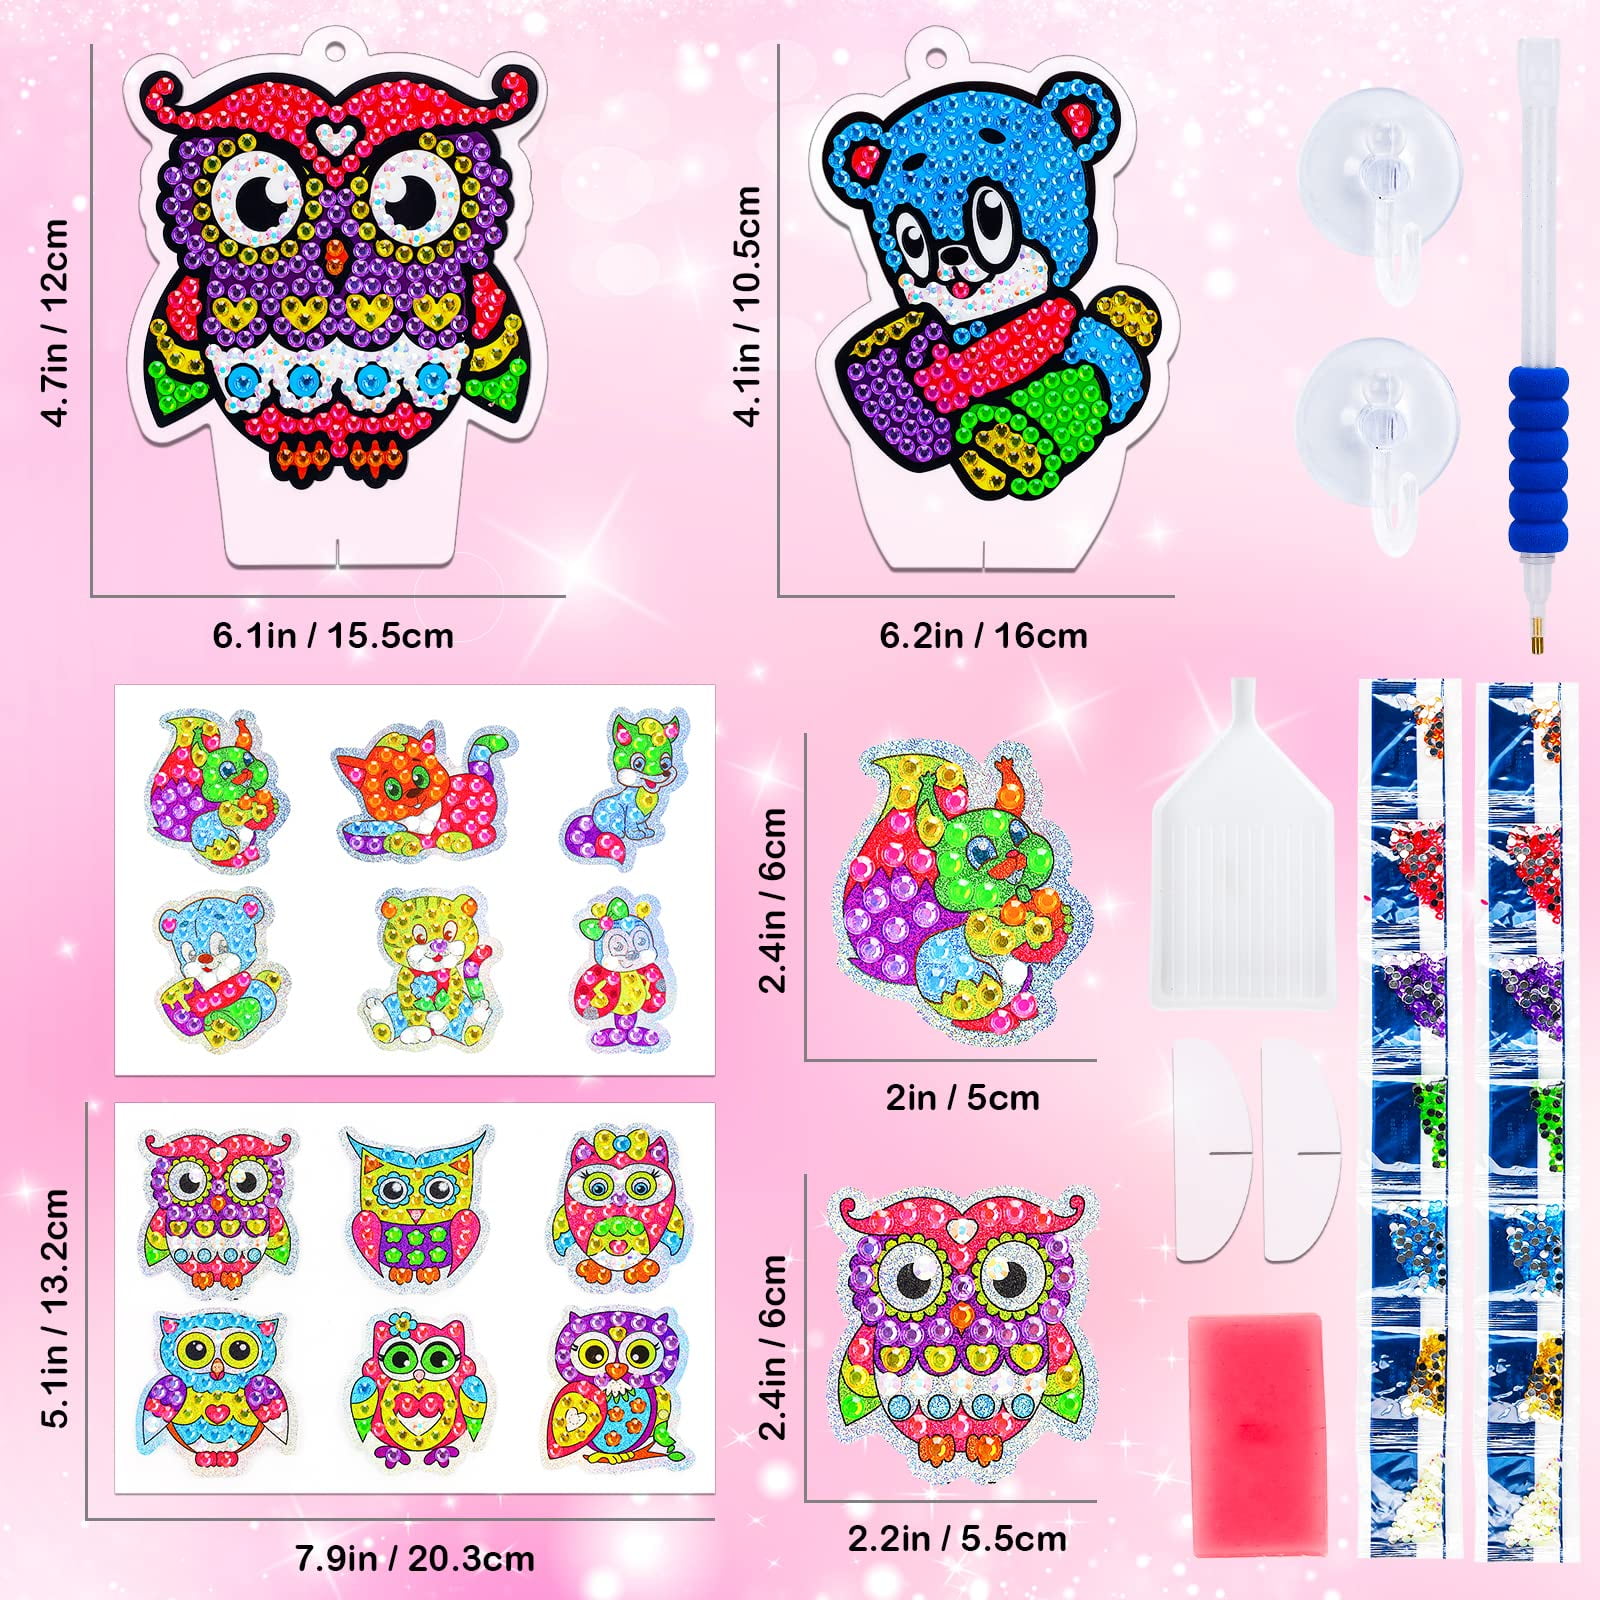 USACRAFT Cute Diamond Painting Kits for Kids 5-7 & Girls 9-12